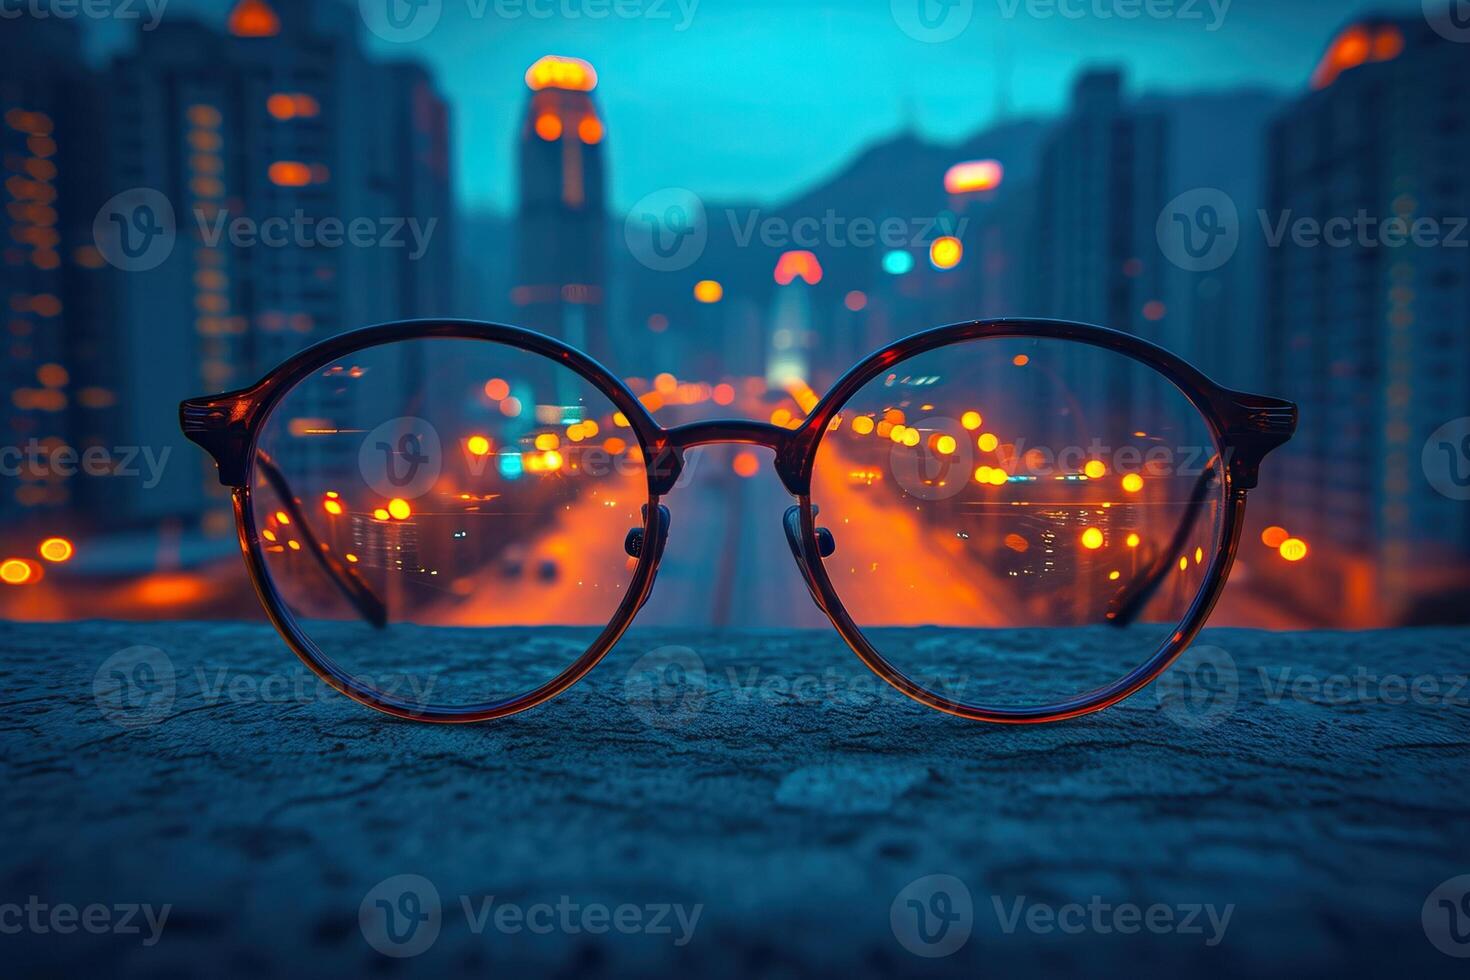 AI Generated Glasses that adjust correctly eyesight from blurred to sharp. Generative AI photo